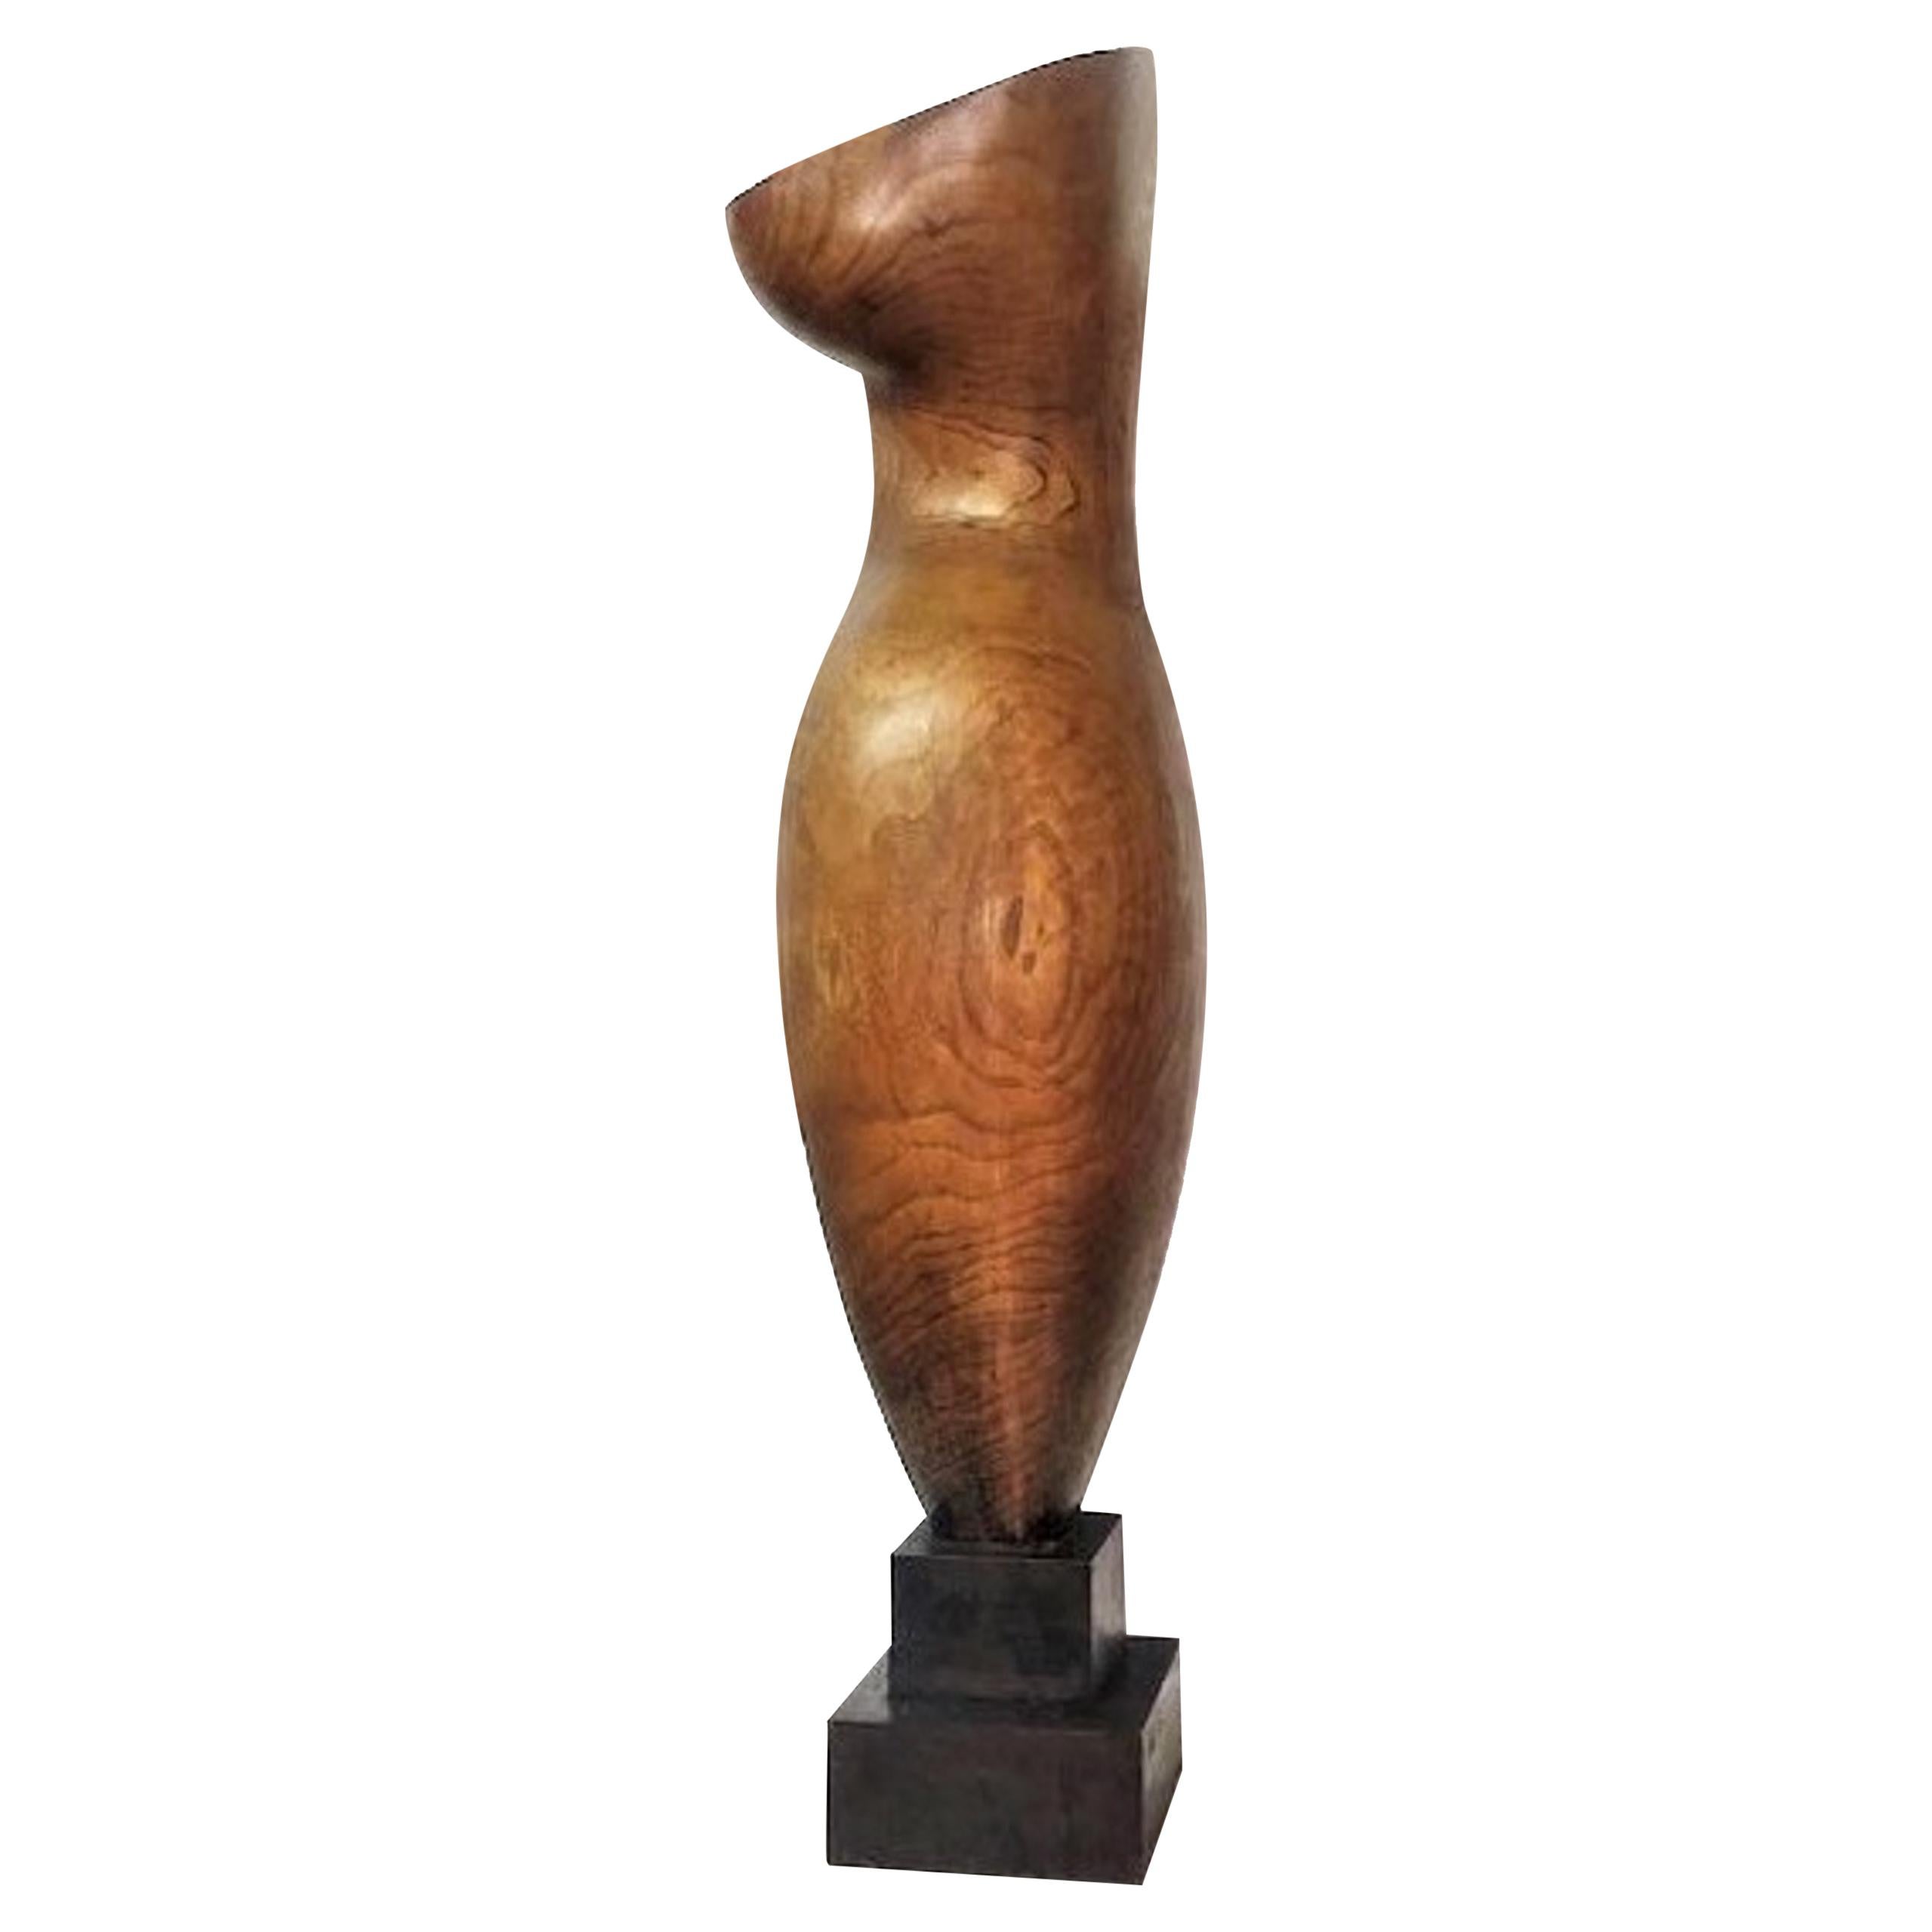 Nude Female Torso, American Mid-Century Modern Wooden Sculpture, ca. 1950s